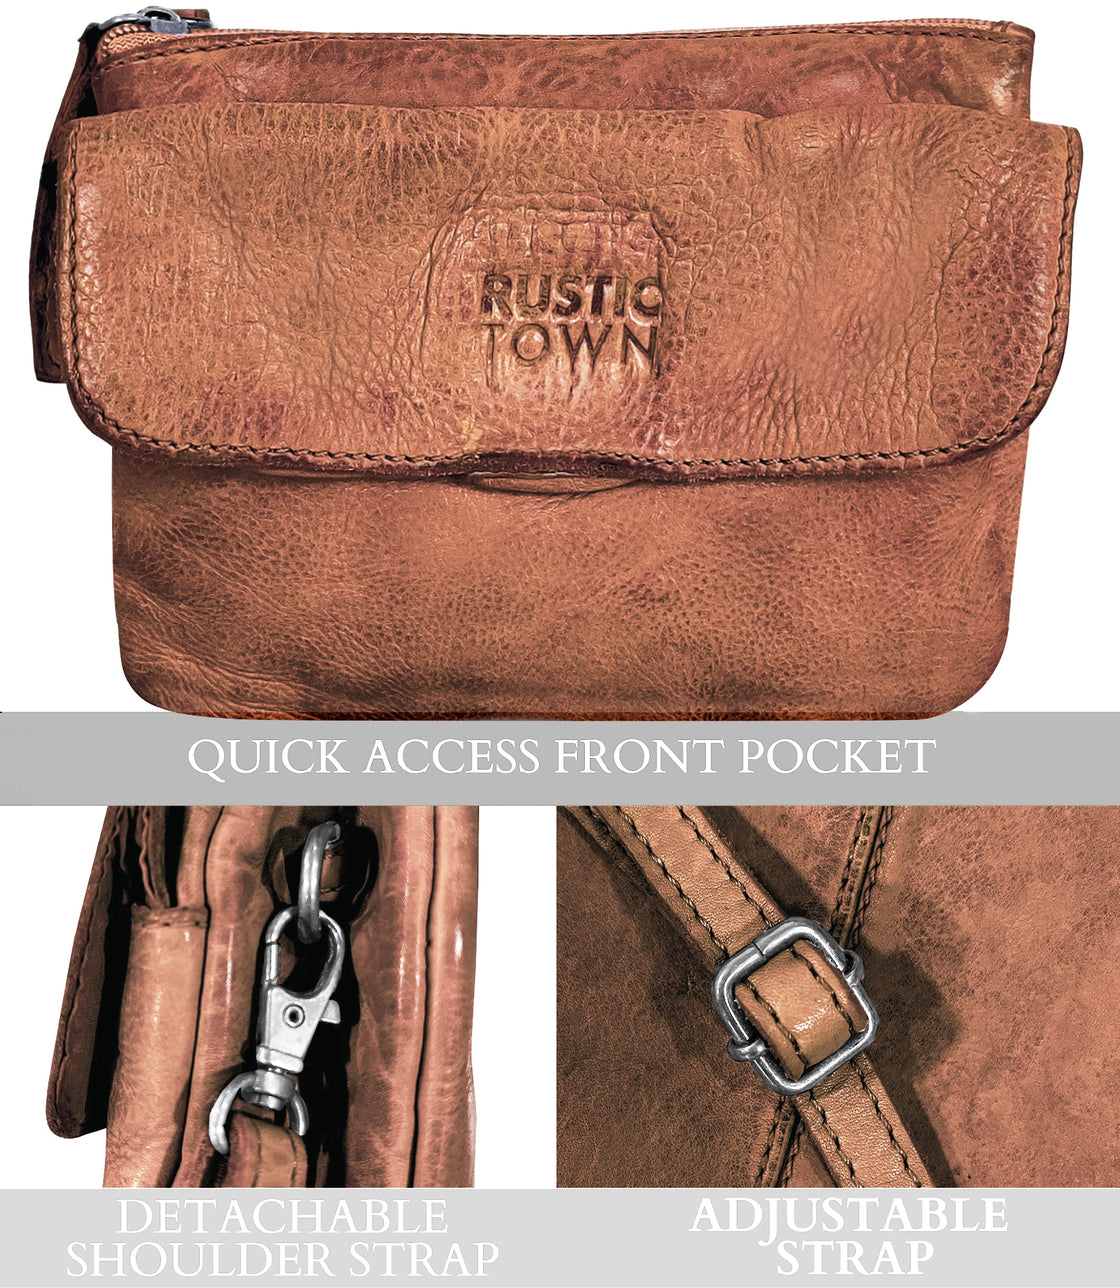 Leather Sling Bag Wristlet Clutch for Women, Cognac